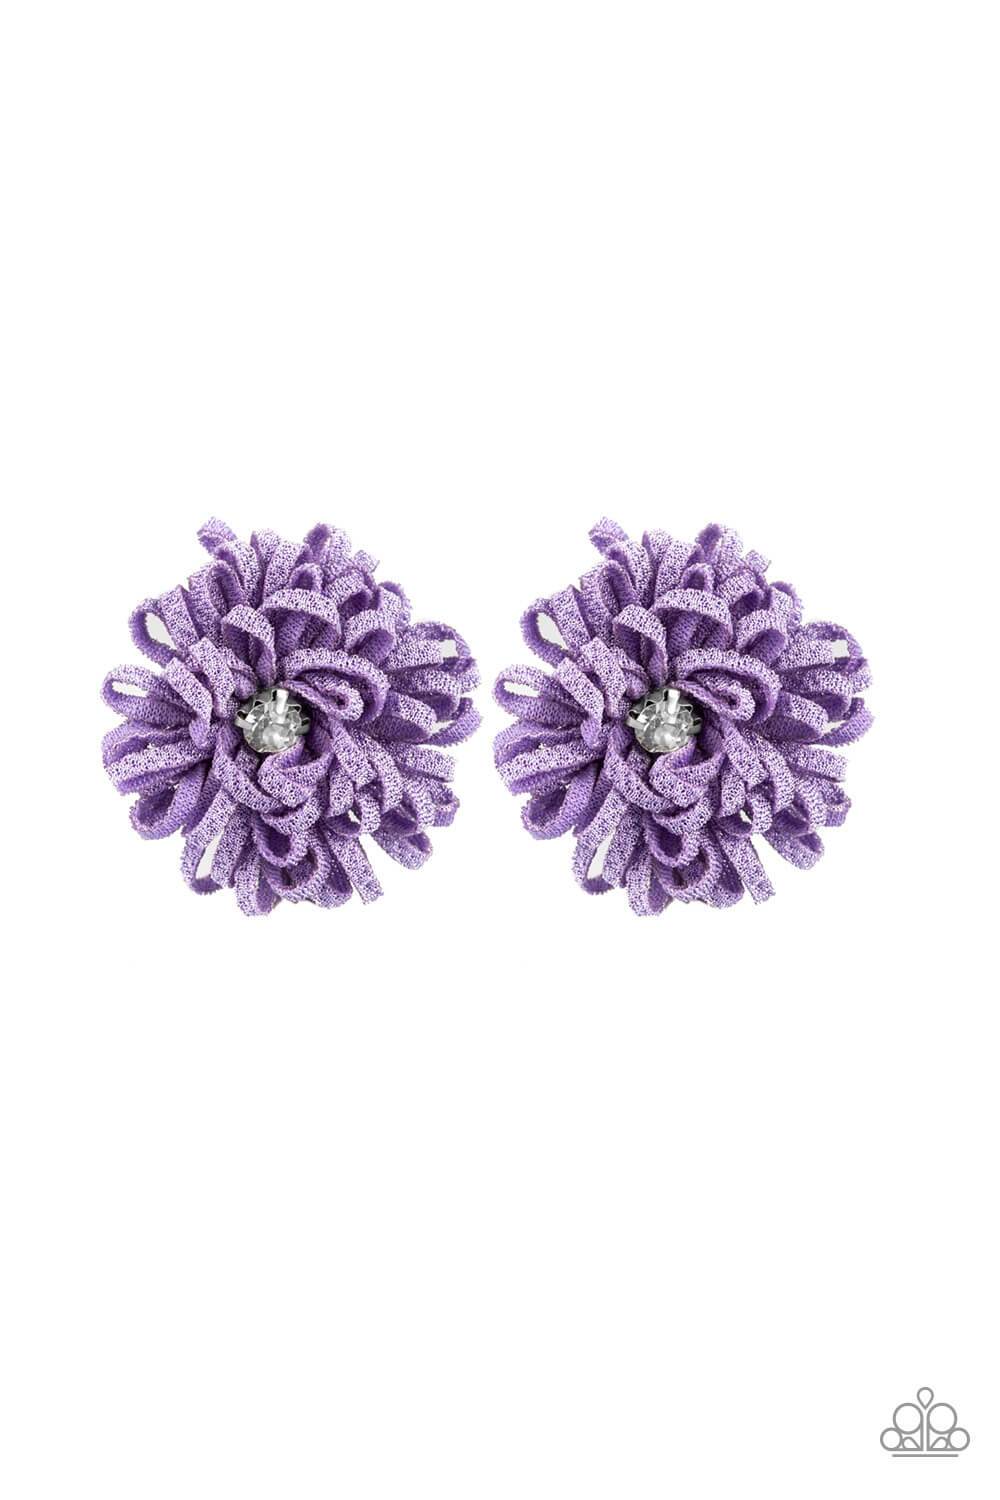 Peppy In Petunias - Purple Hair Clips - Princess Glam Shop